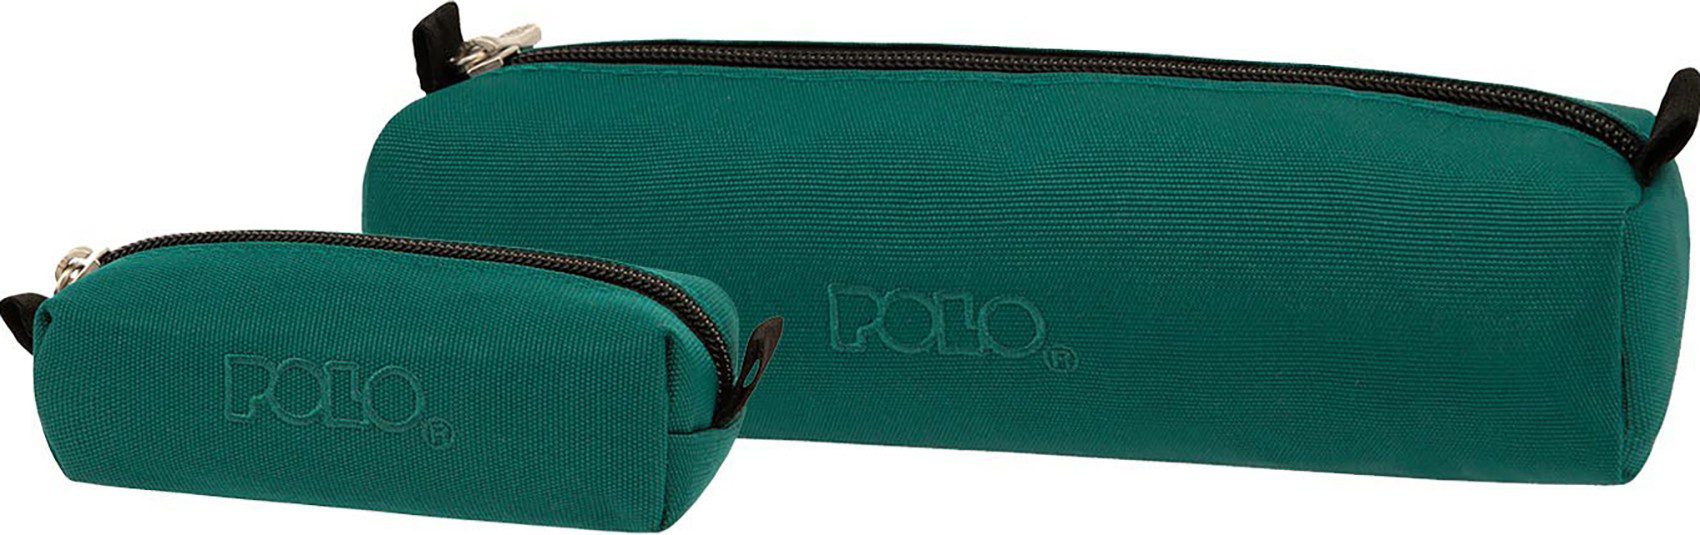 Polo Κασετινα Wallet Cord Πετρολ 2023